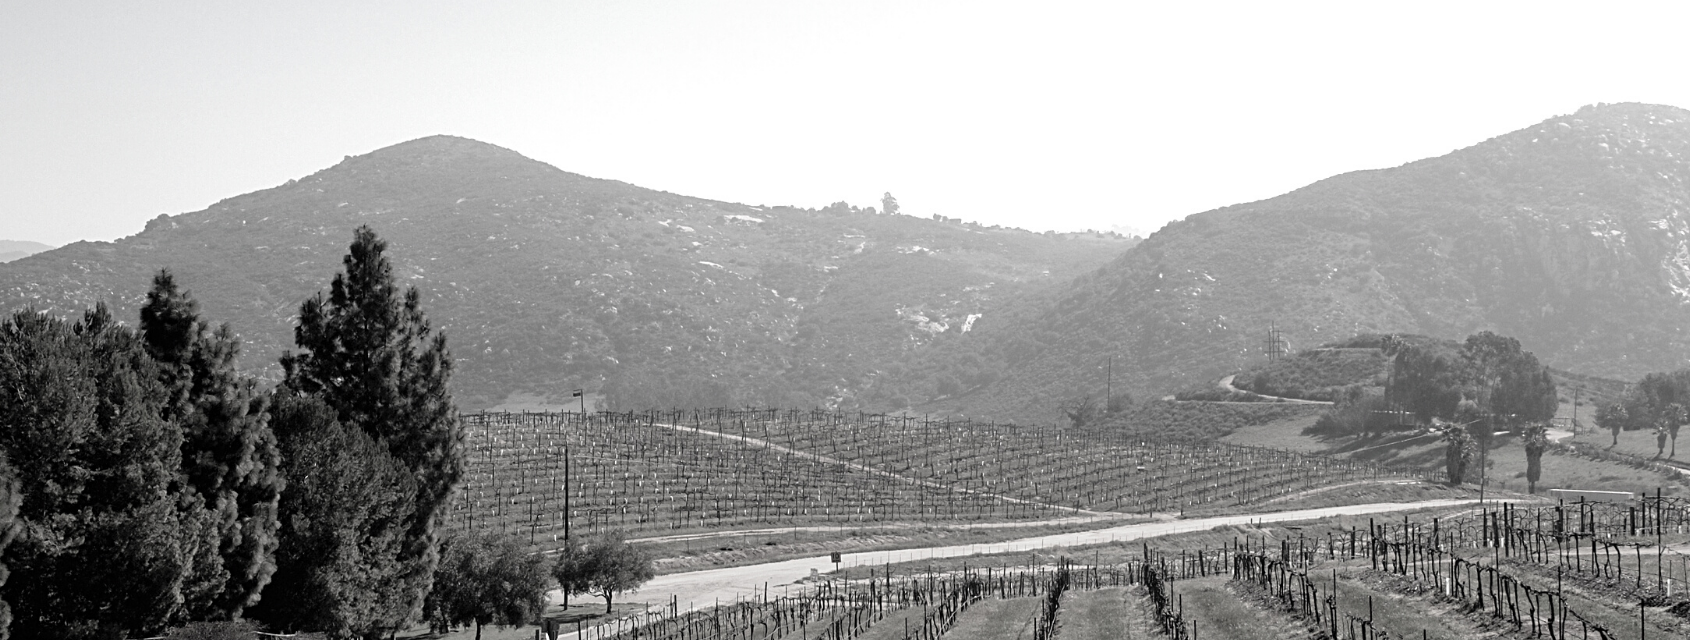 landscape with vineyard